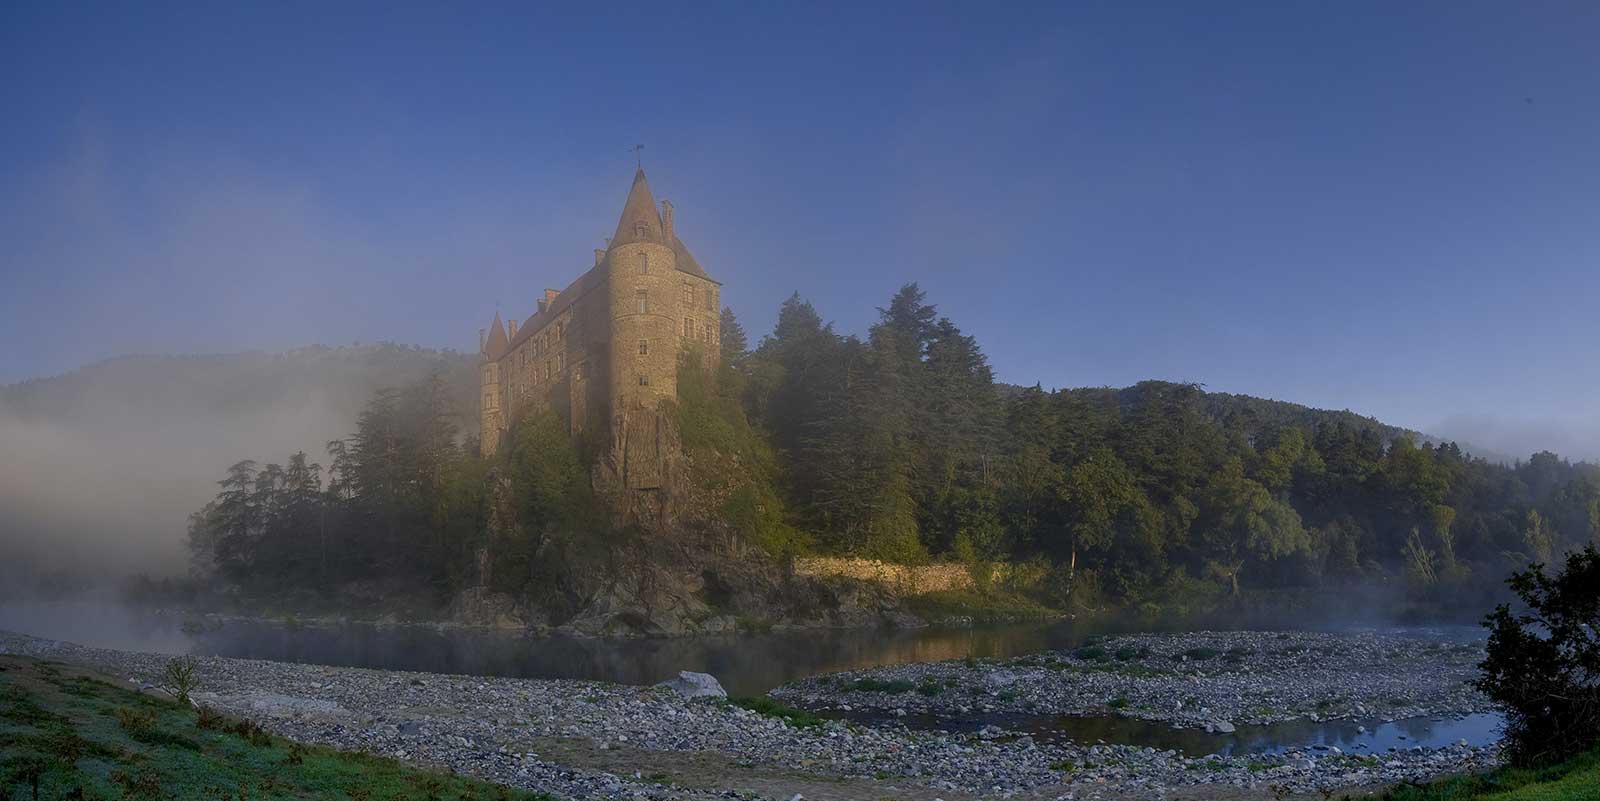 The castle of Lavoûte-Polignac in Lavoûte-sur-Loire in Haute-Loire, Auvergne